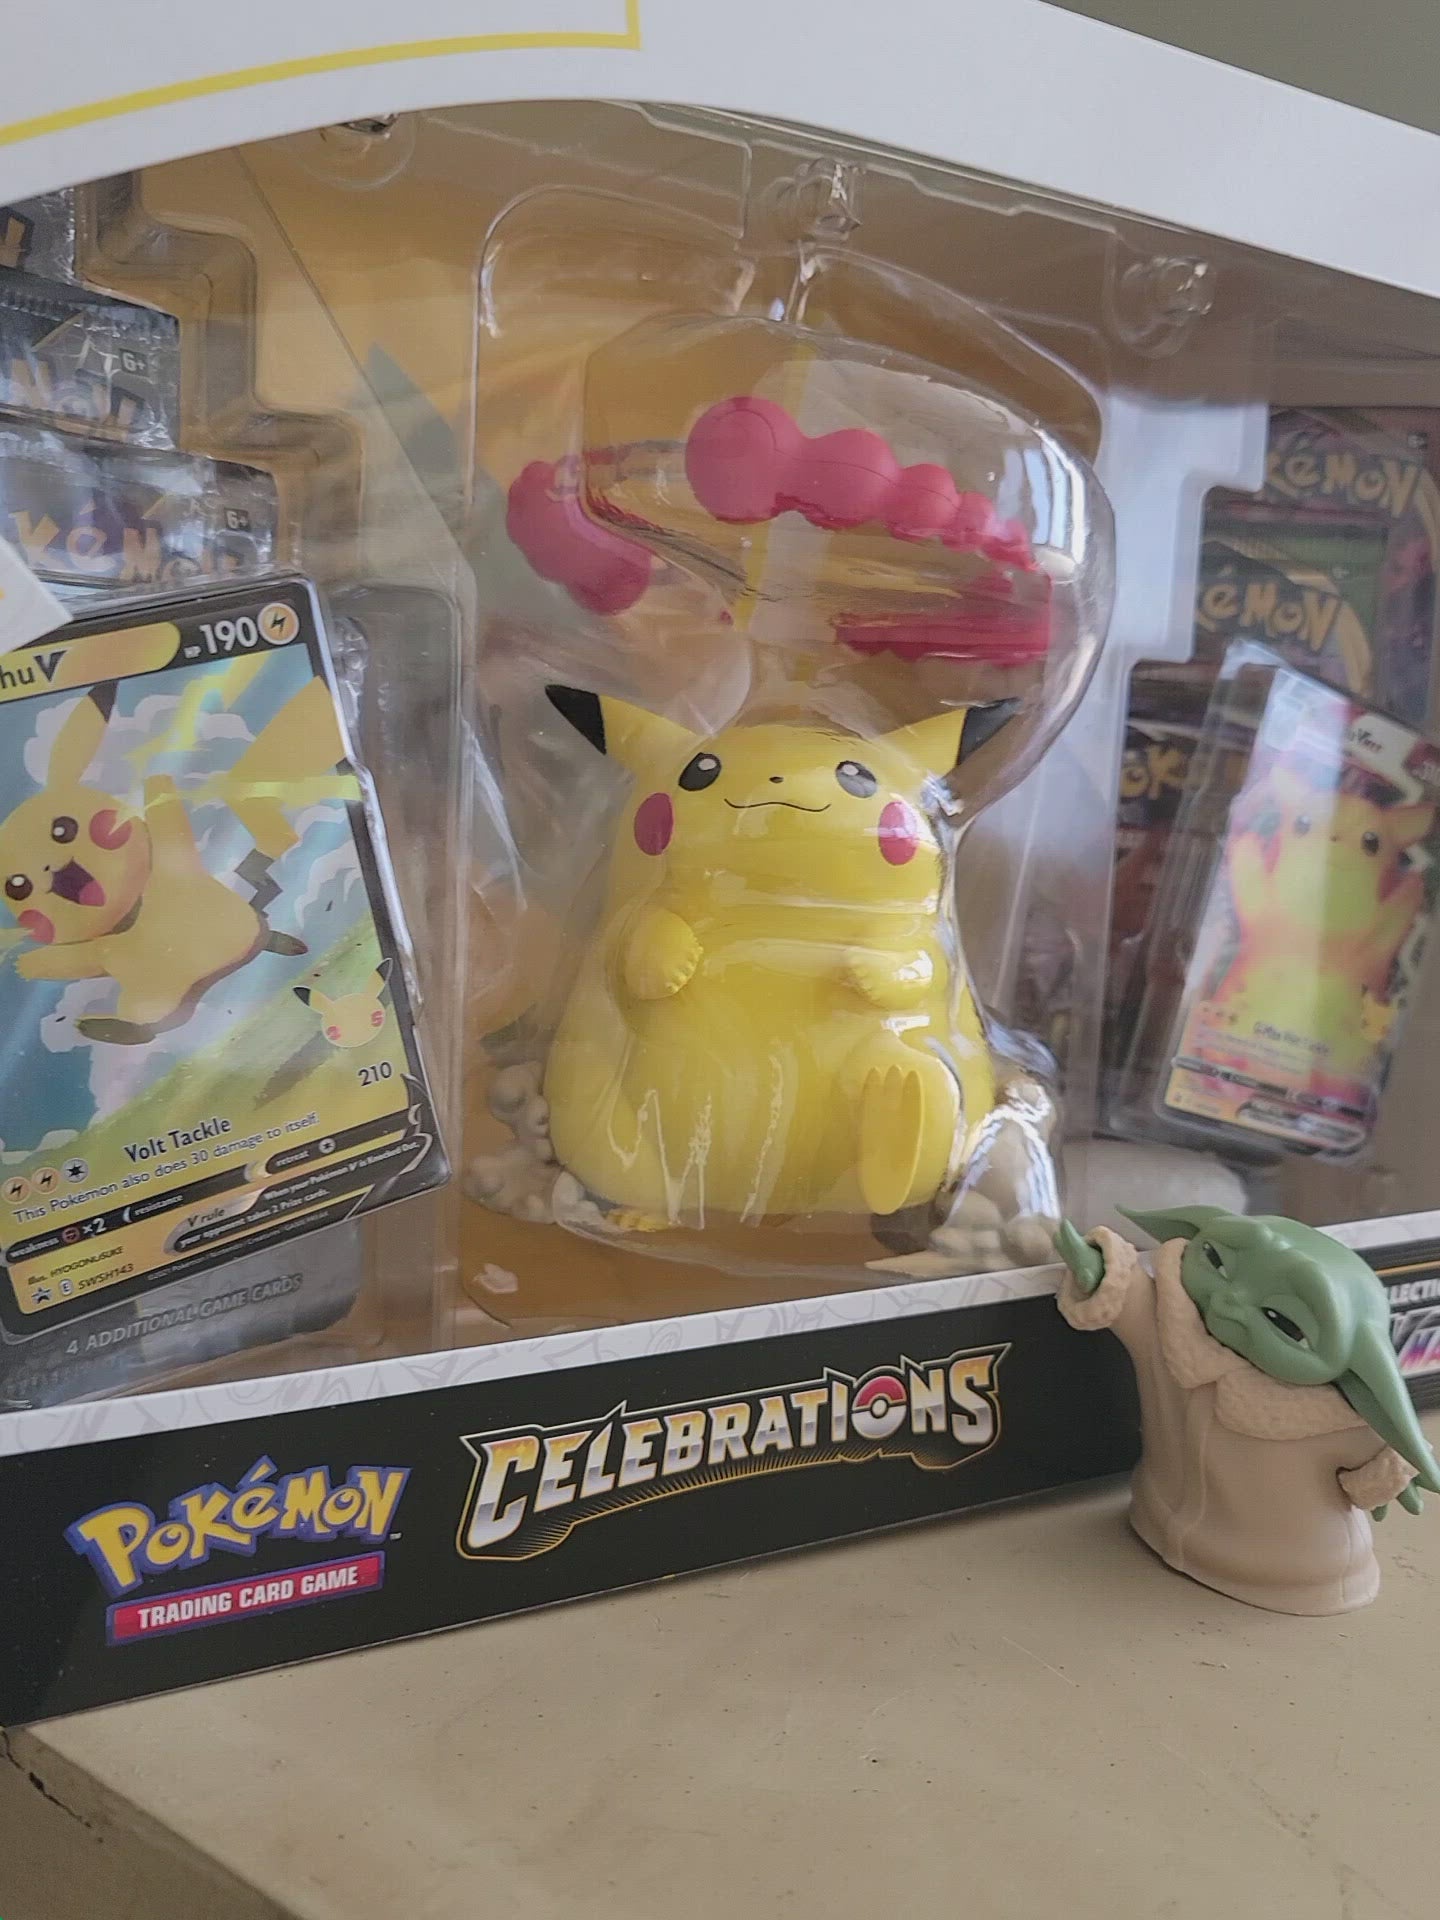 Celebrations Premium Figure Collection-Pikachu VMAX - Pokemon TCG